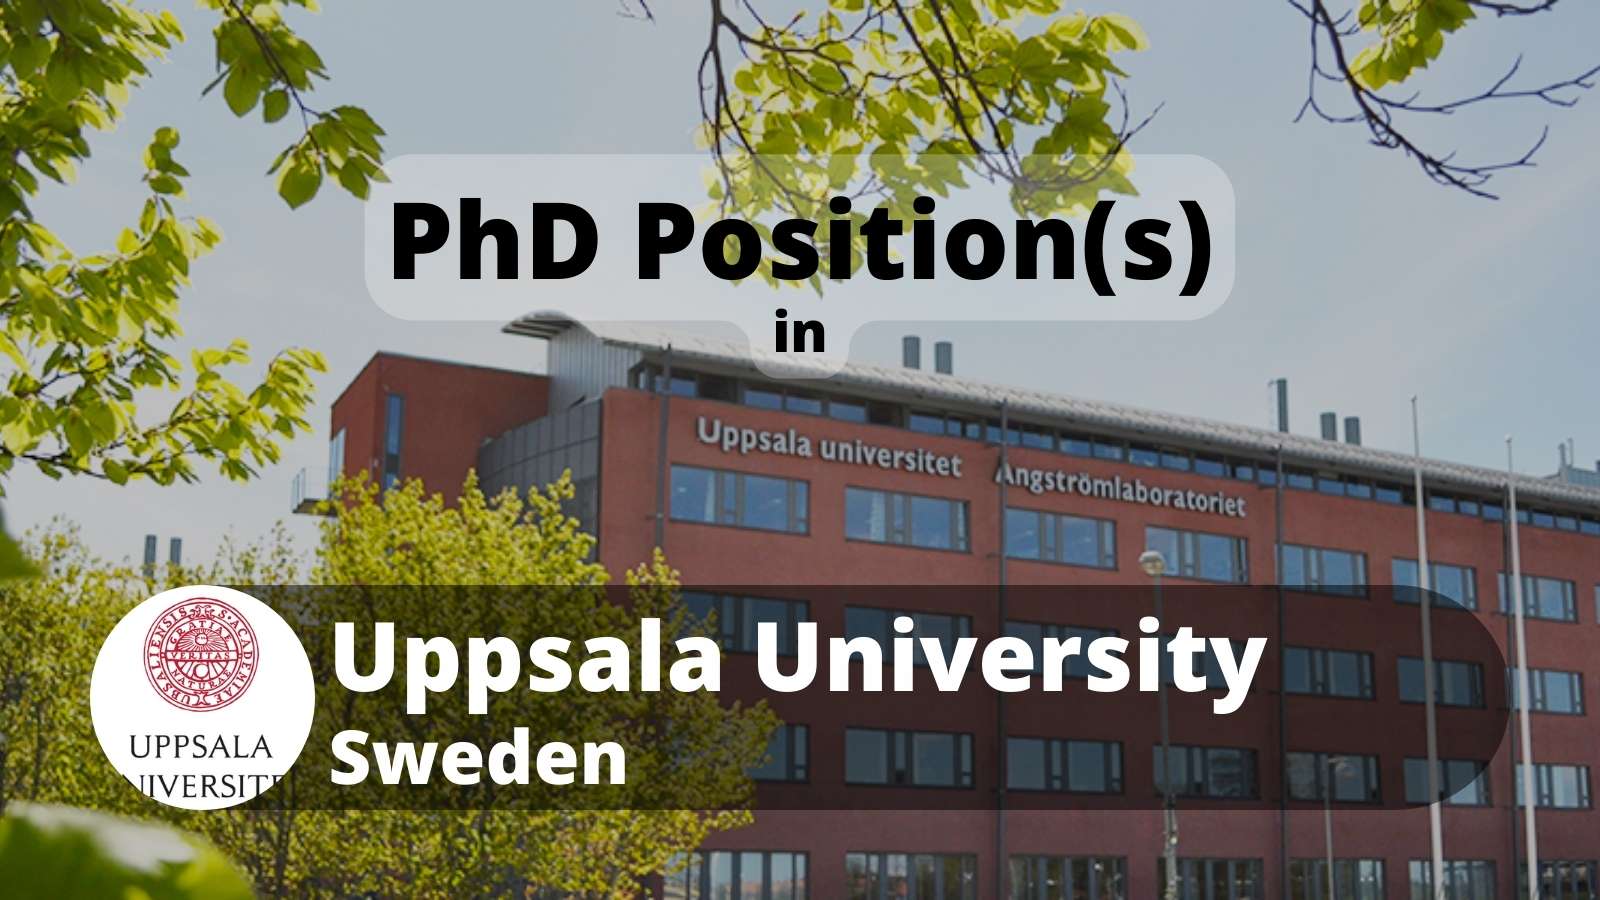 PhD Positions in Uppsala University Sweden